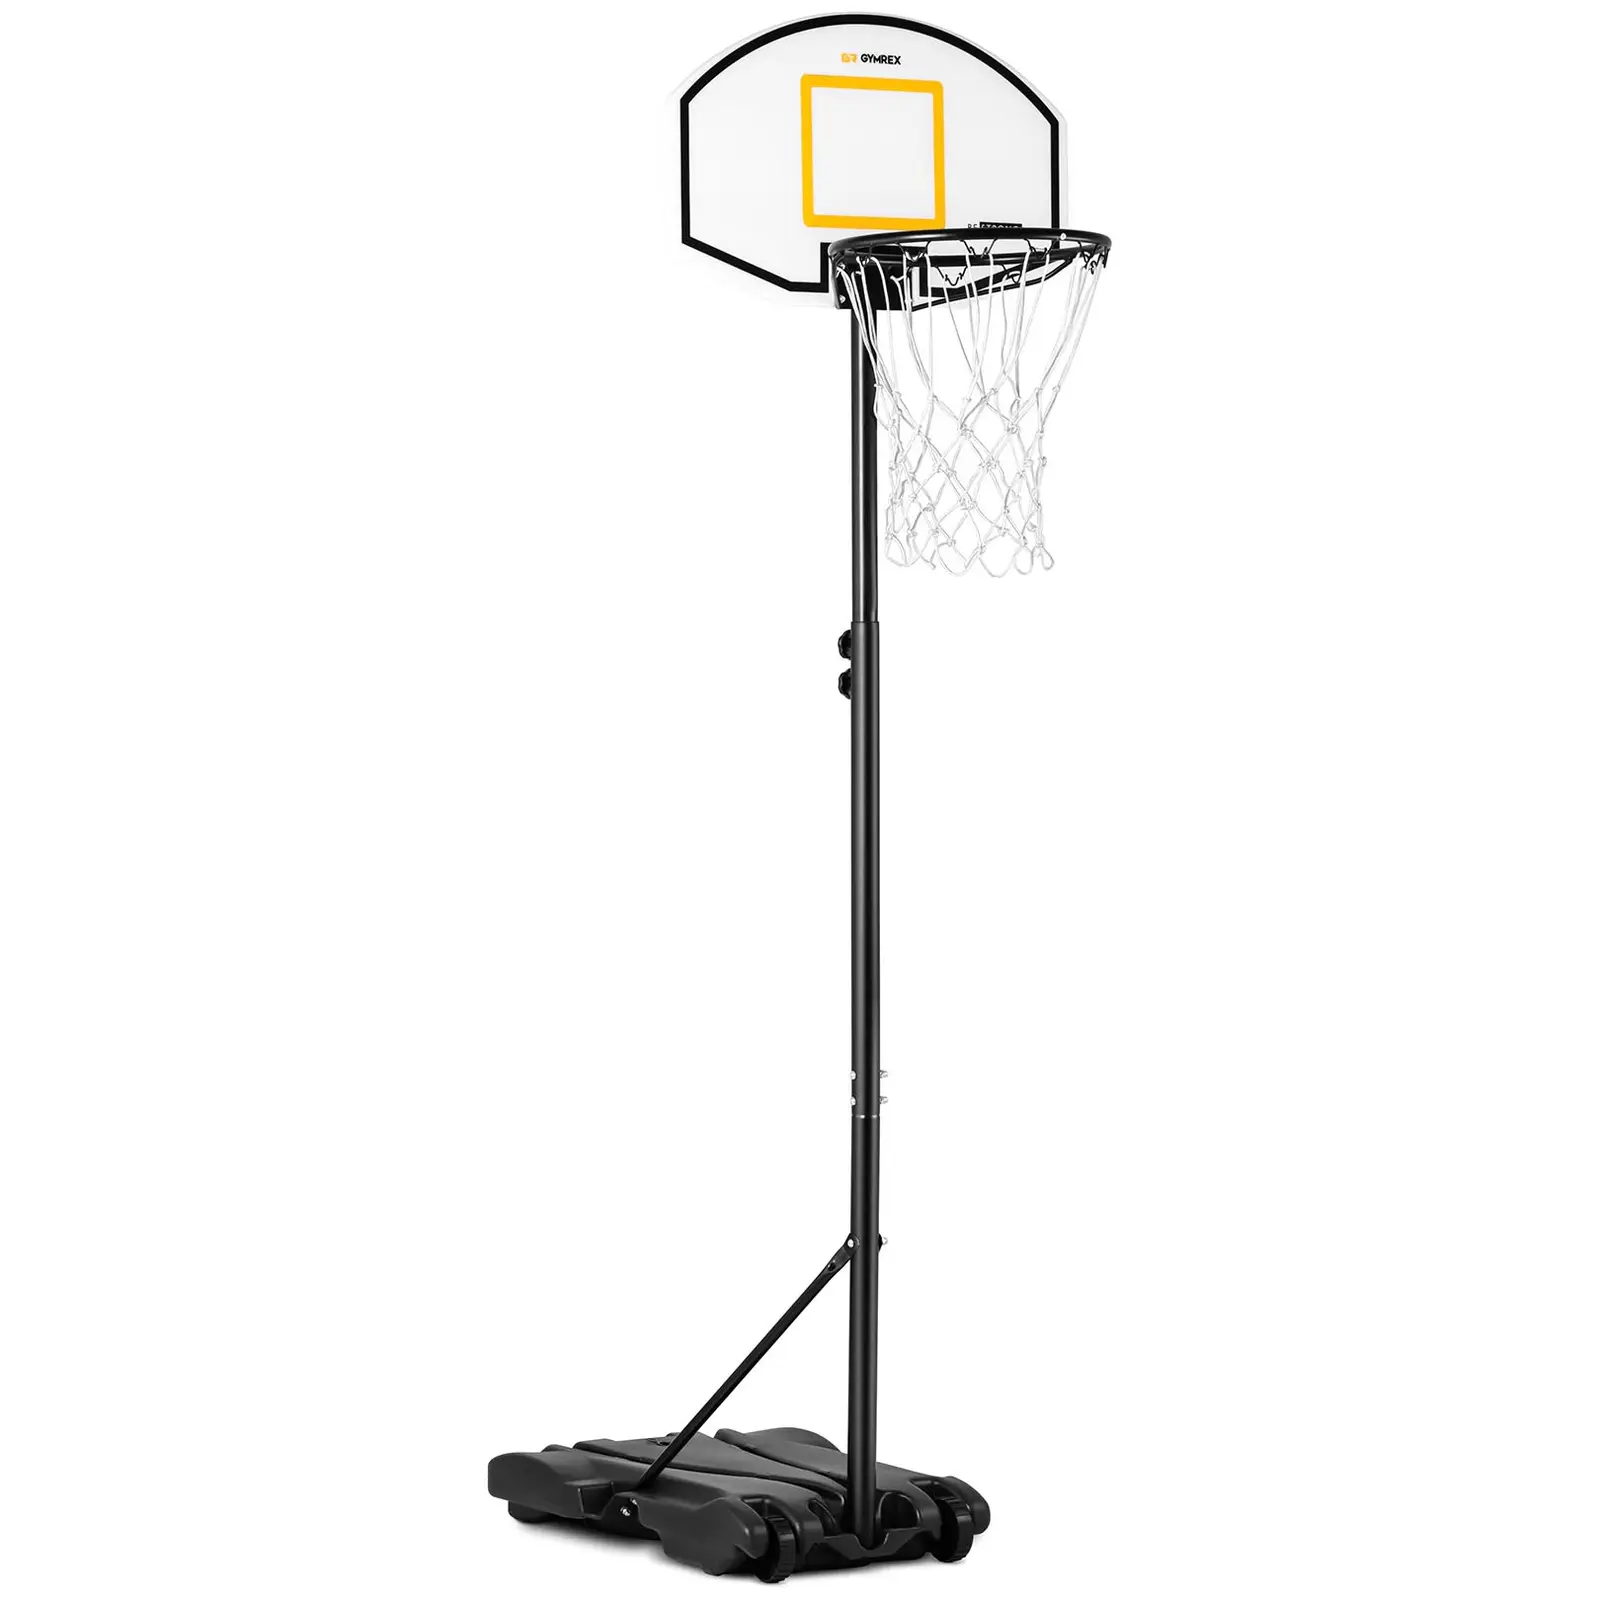 Canasta de baloncesto para niños - regulable en altura - de 178 a 205 cm